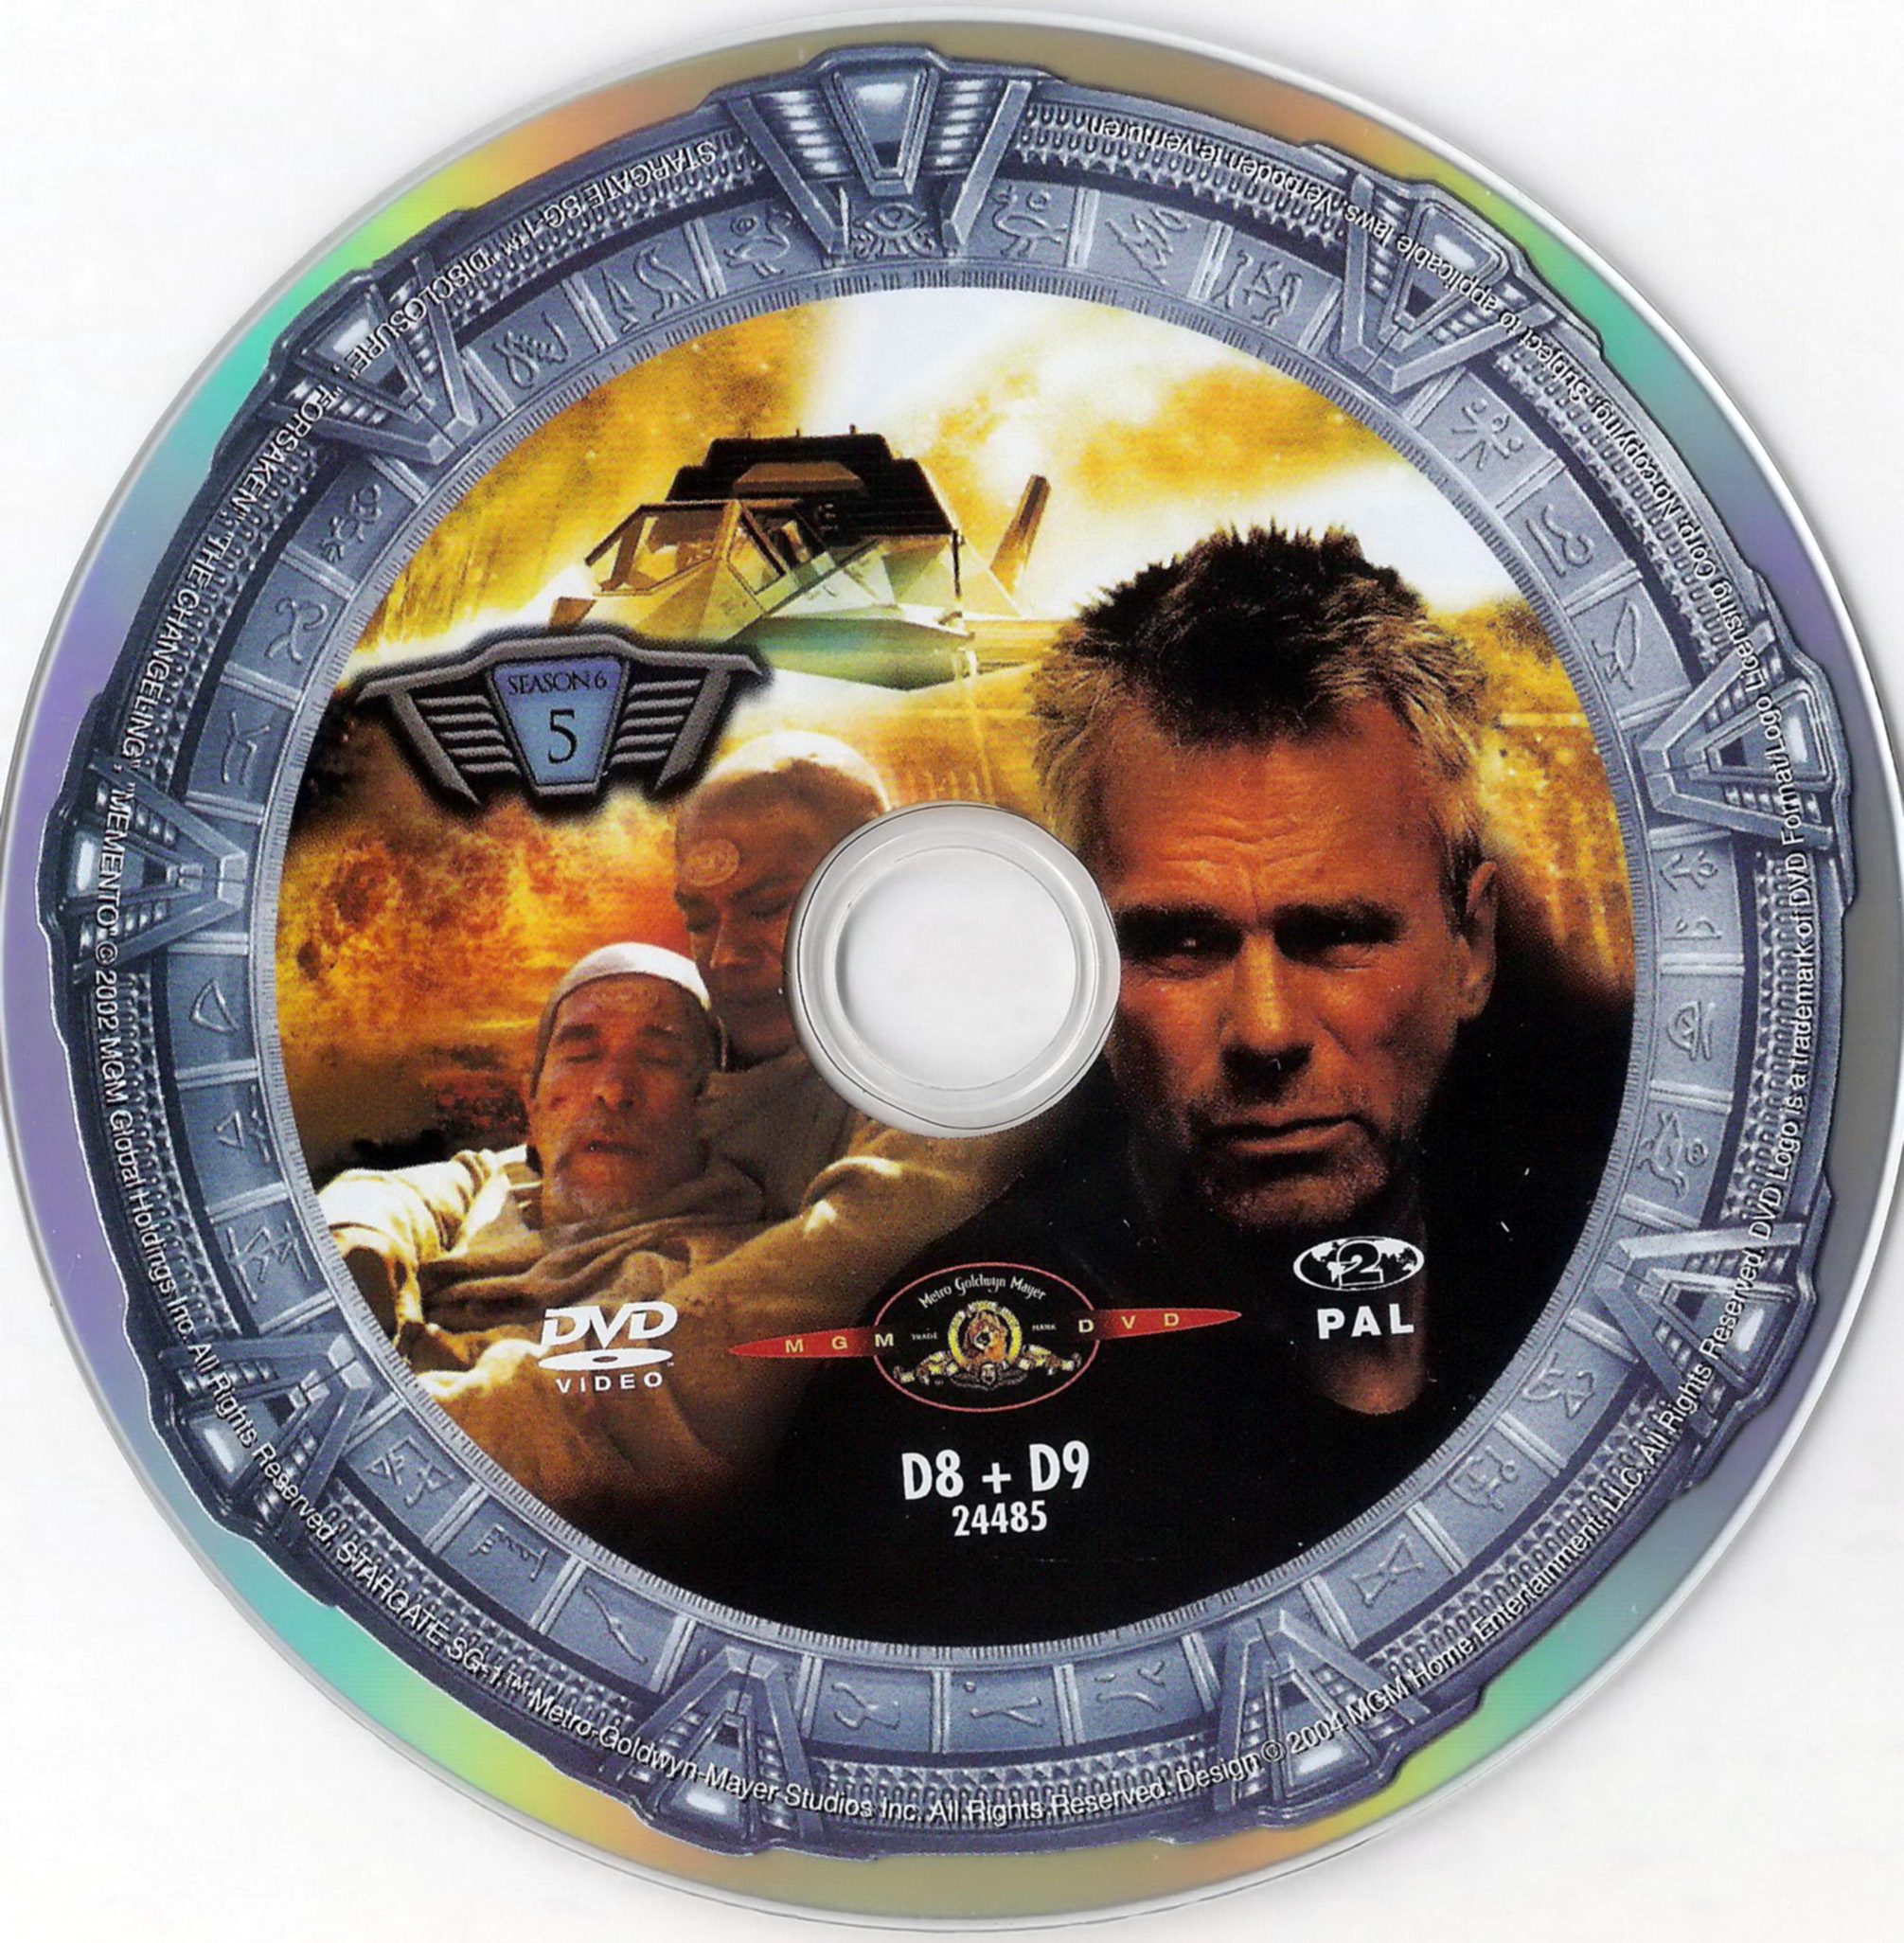 Stargate SG1 Saison 6 DISC 5